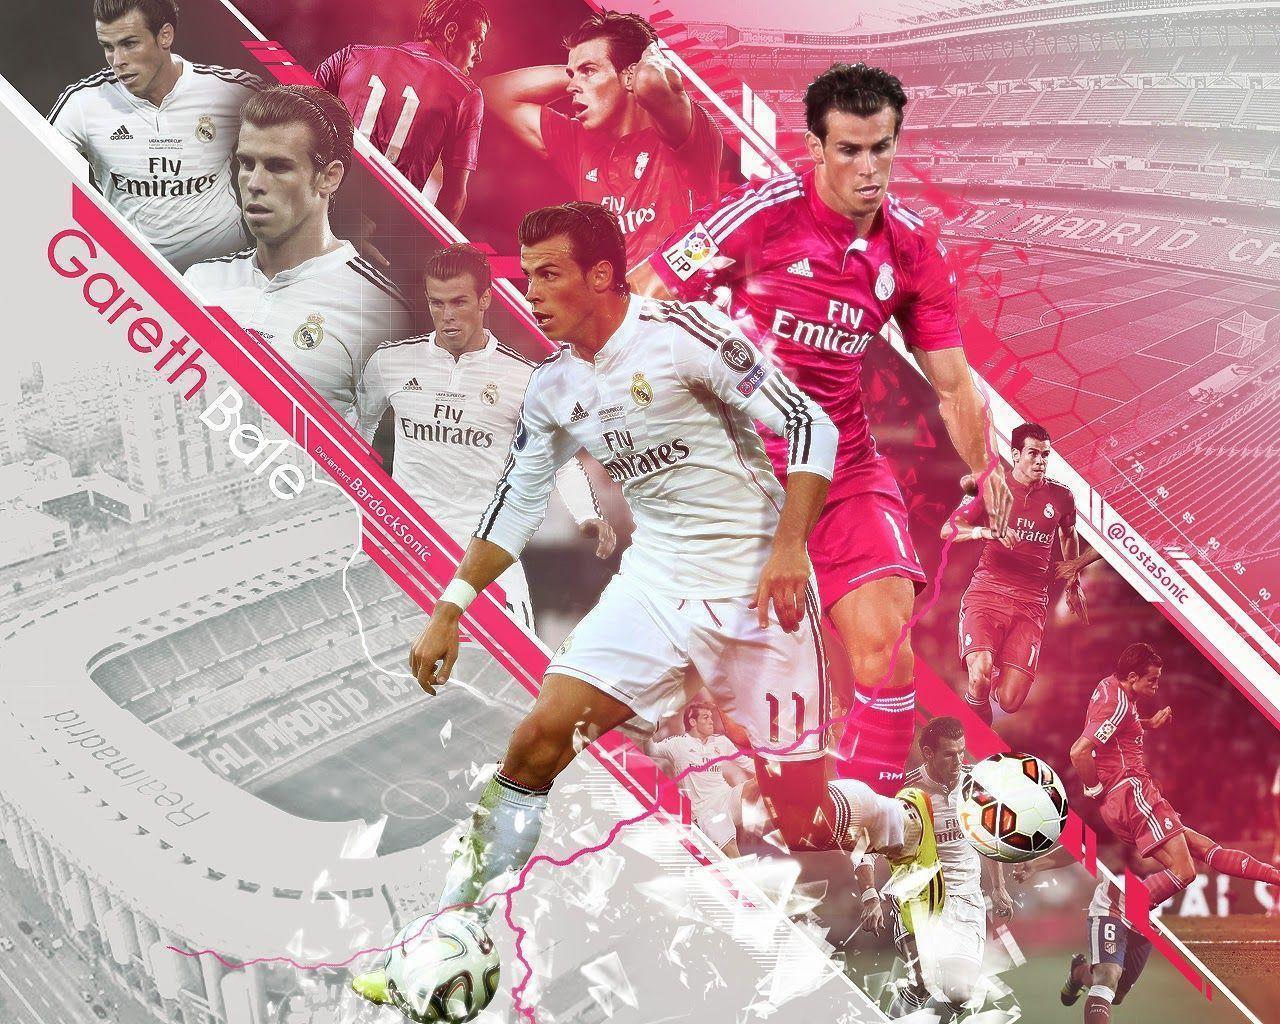 Gareth Bale HD Wallpaper 2015 Real Madrid Footballer